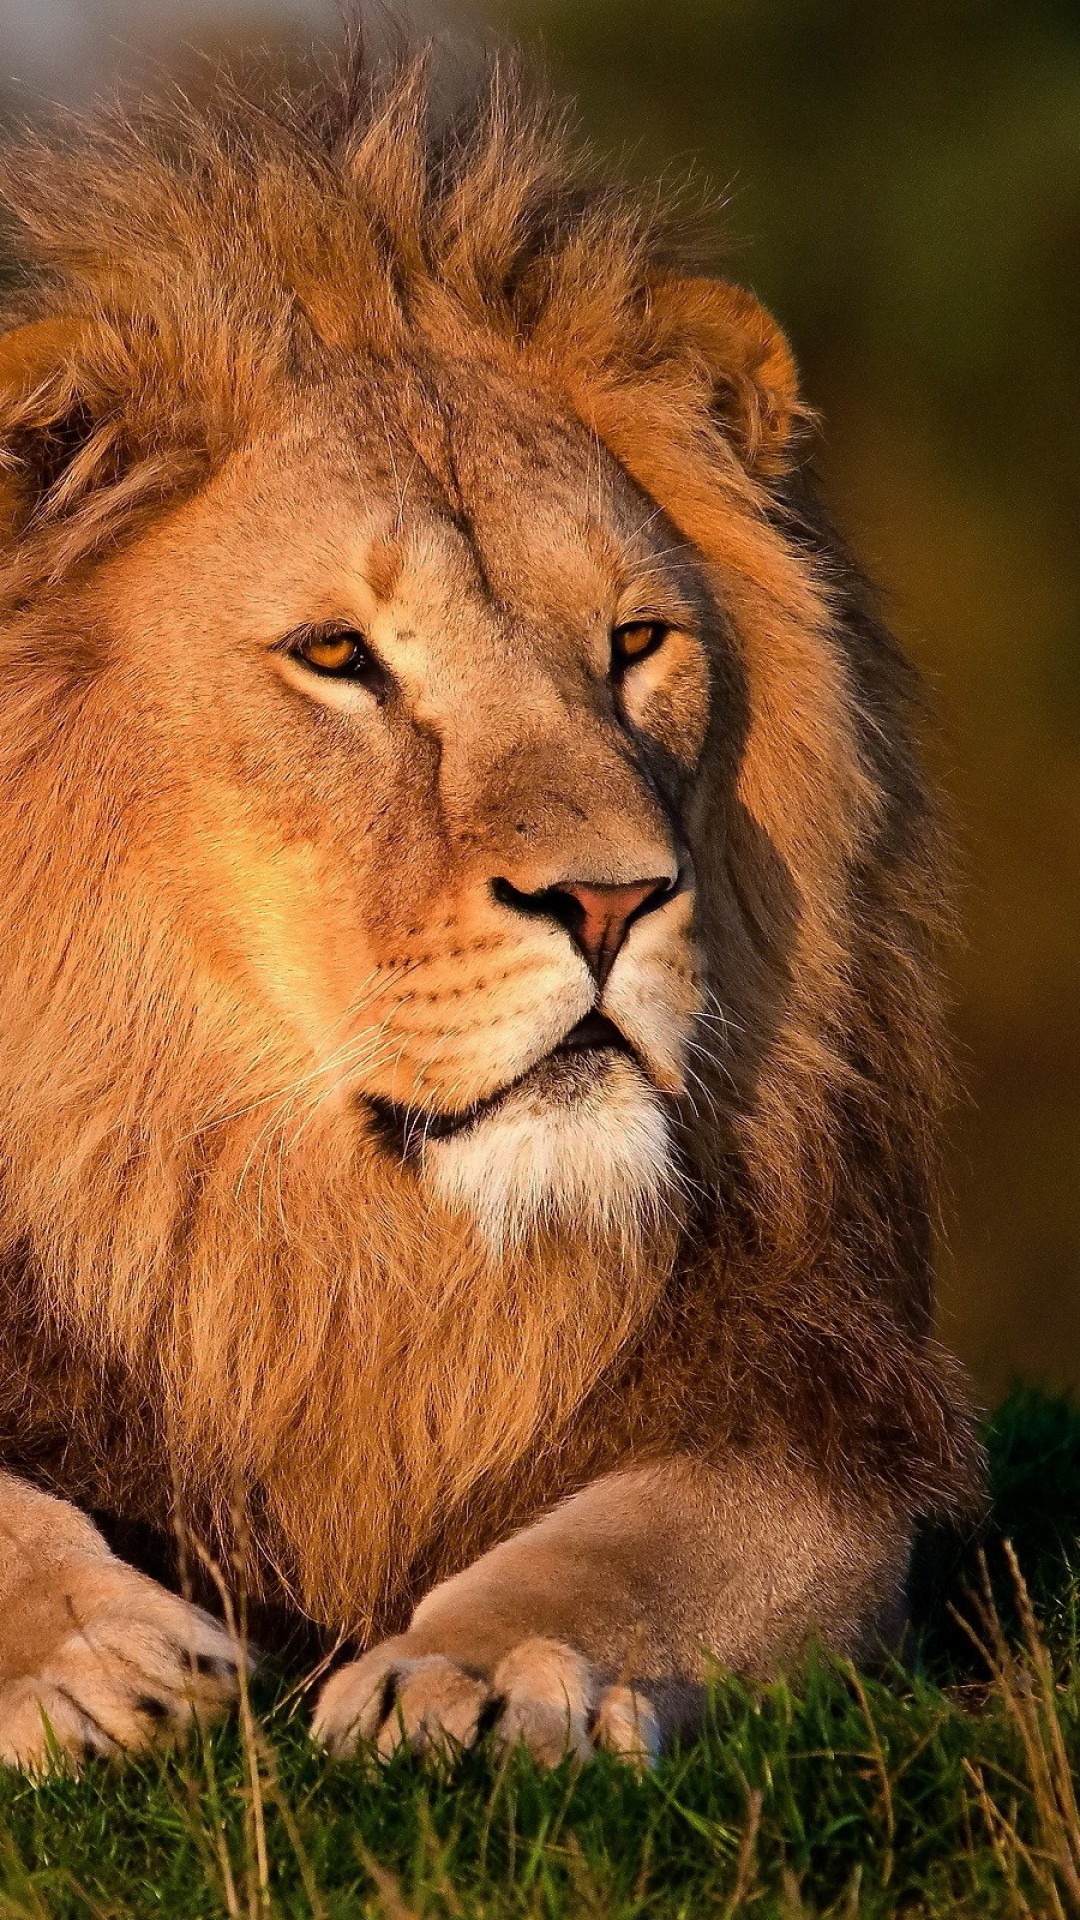 lion wallpaper iphone,mammal,lion,vertebrate,wildlife,terrestrial animal